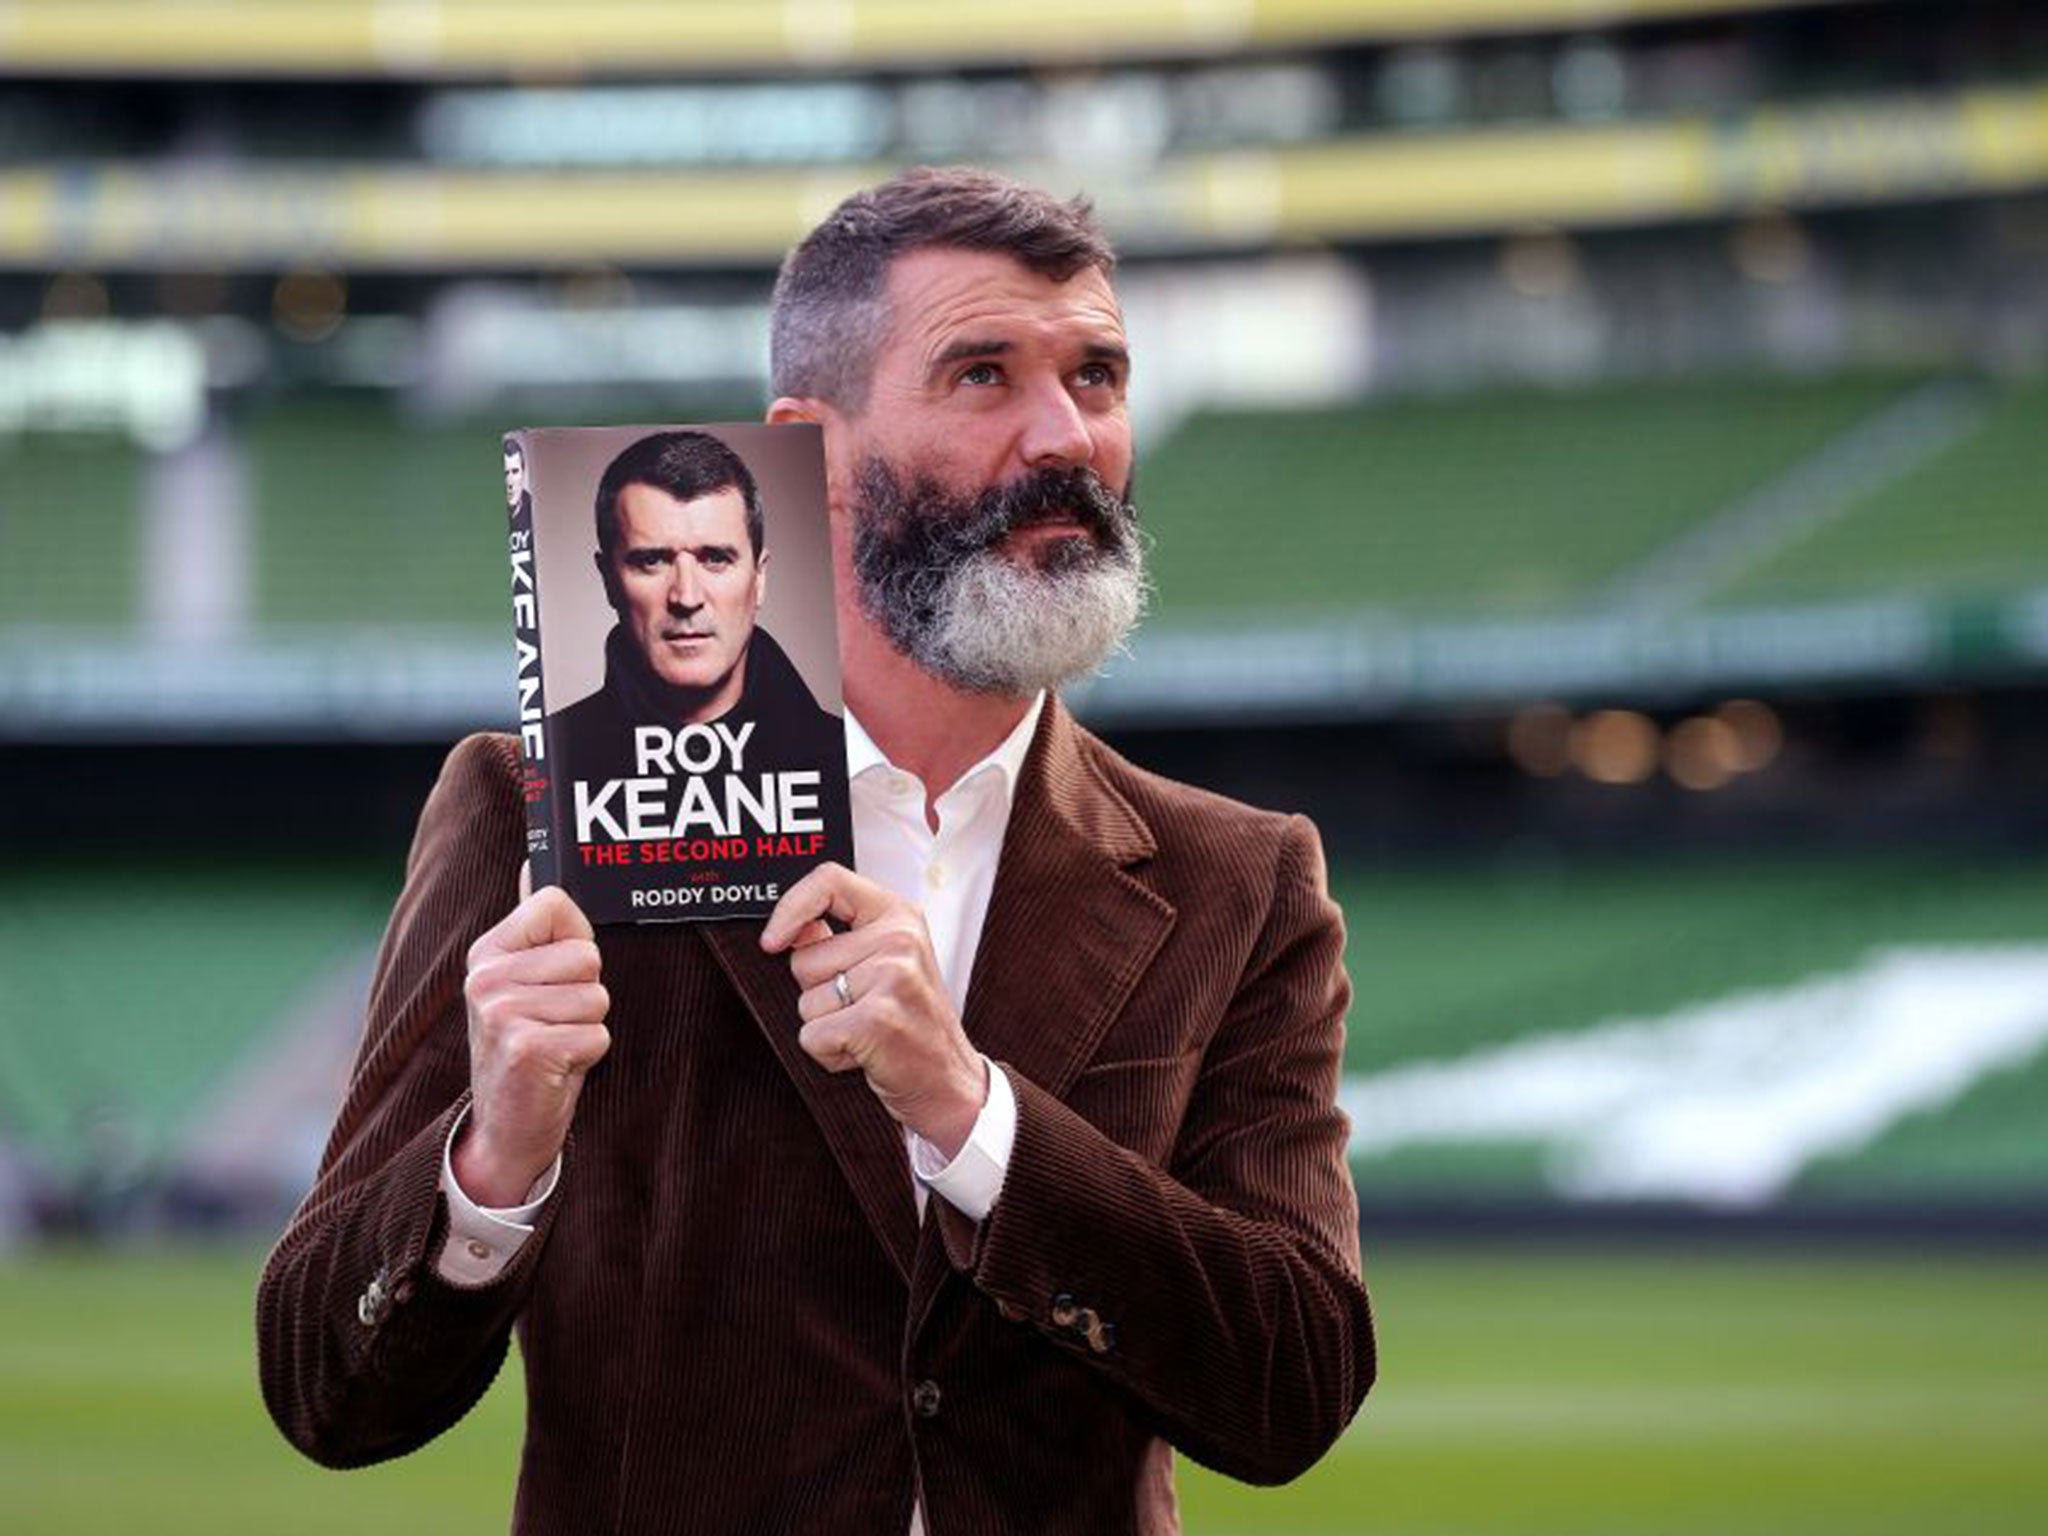 Roy Keane during the book launch at the Aviva Stadium, Dublin